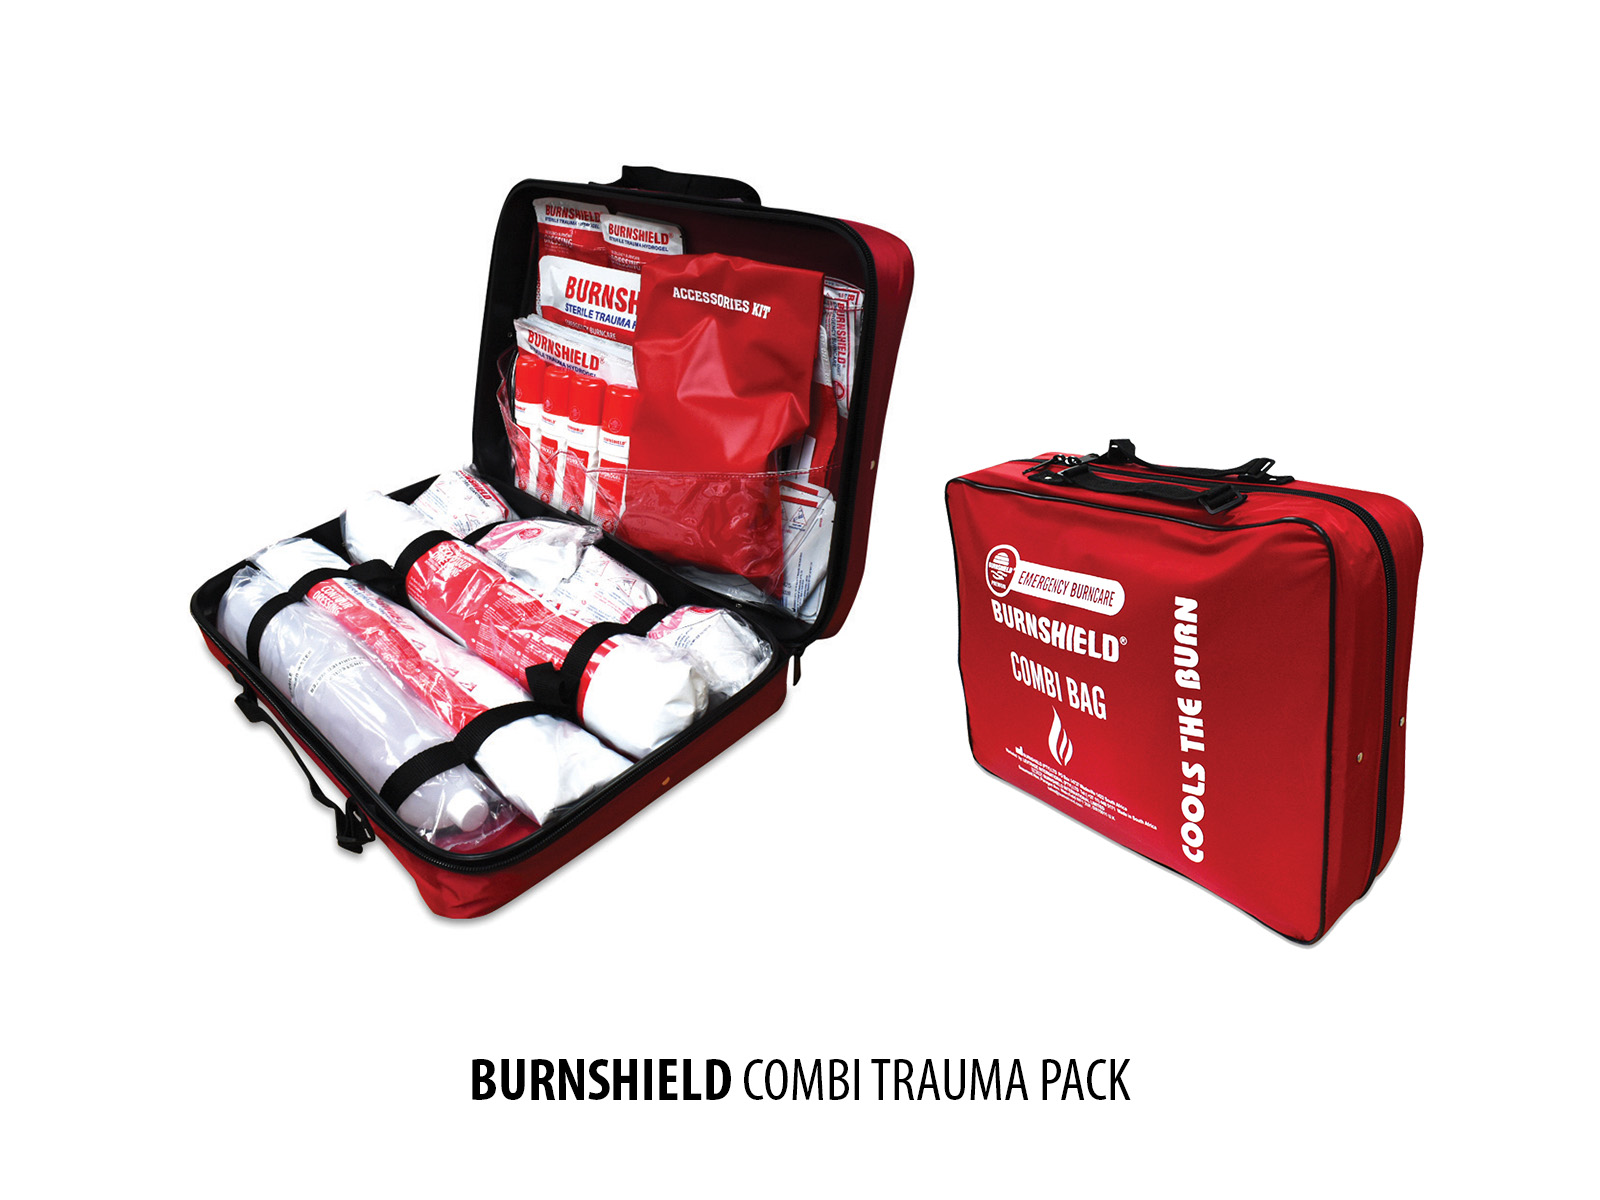 Burnshield Combi Trauma Pack